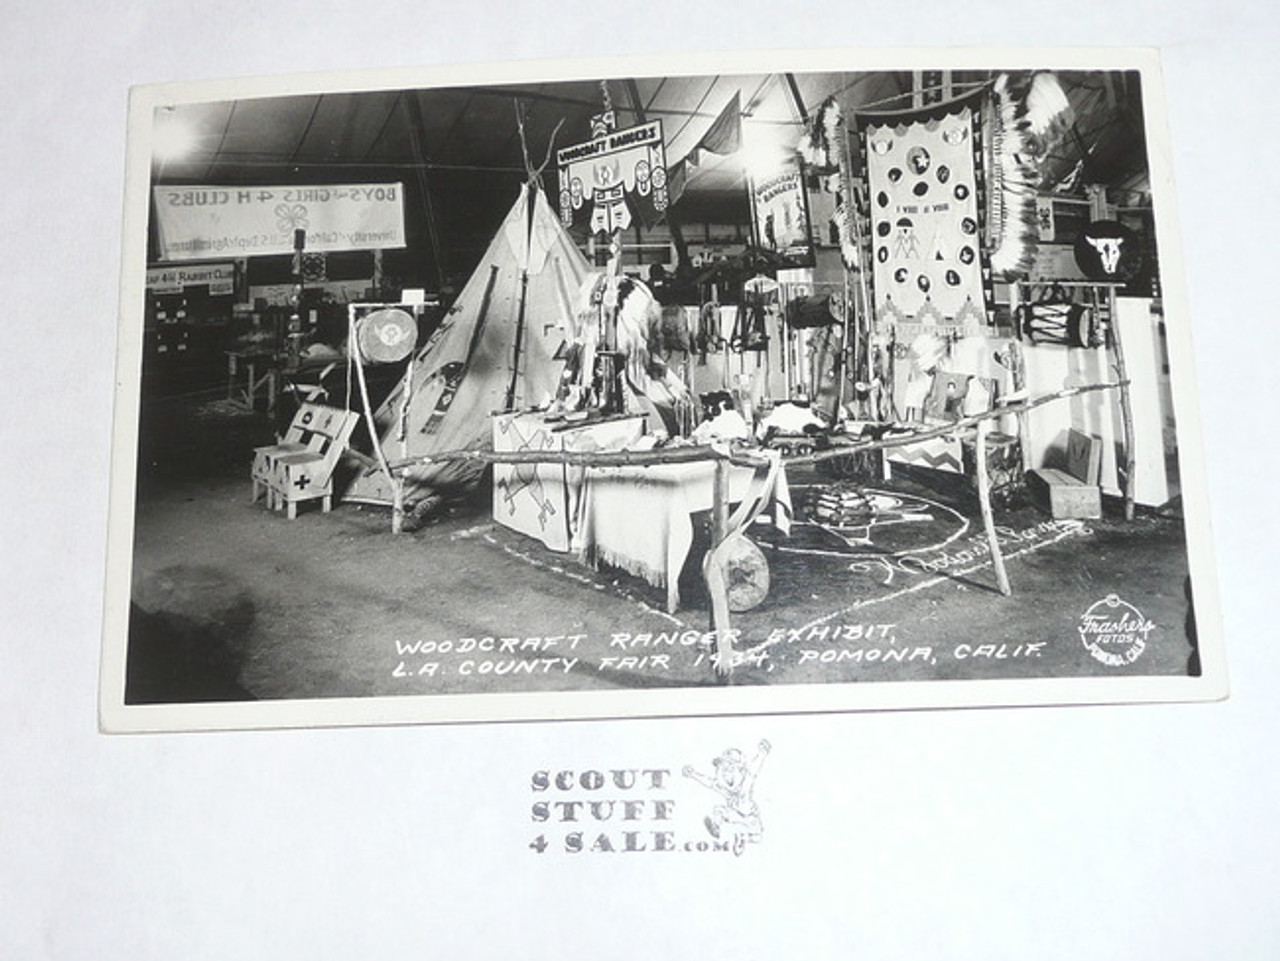 1934 Woodcraft Ranger Exhibit at L.A. County Fair Post card